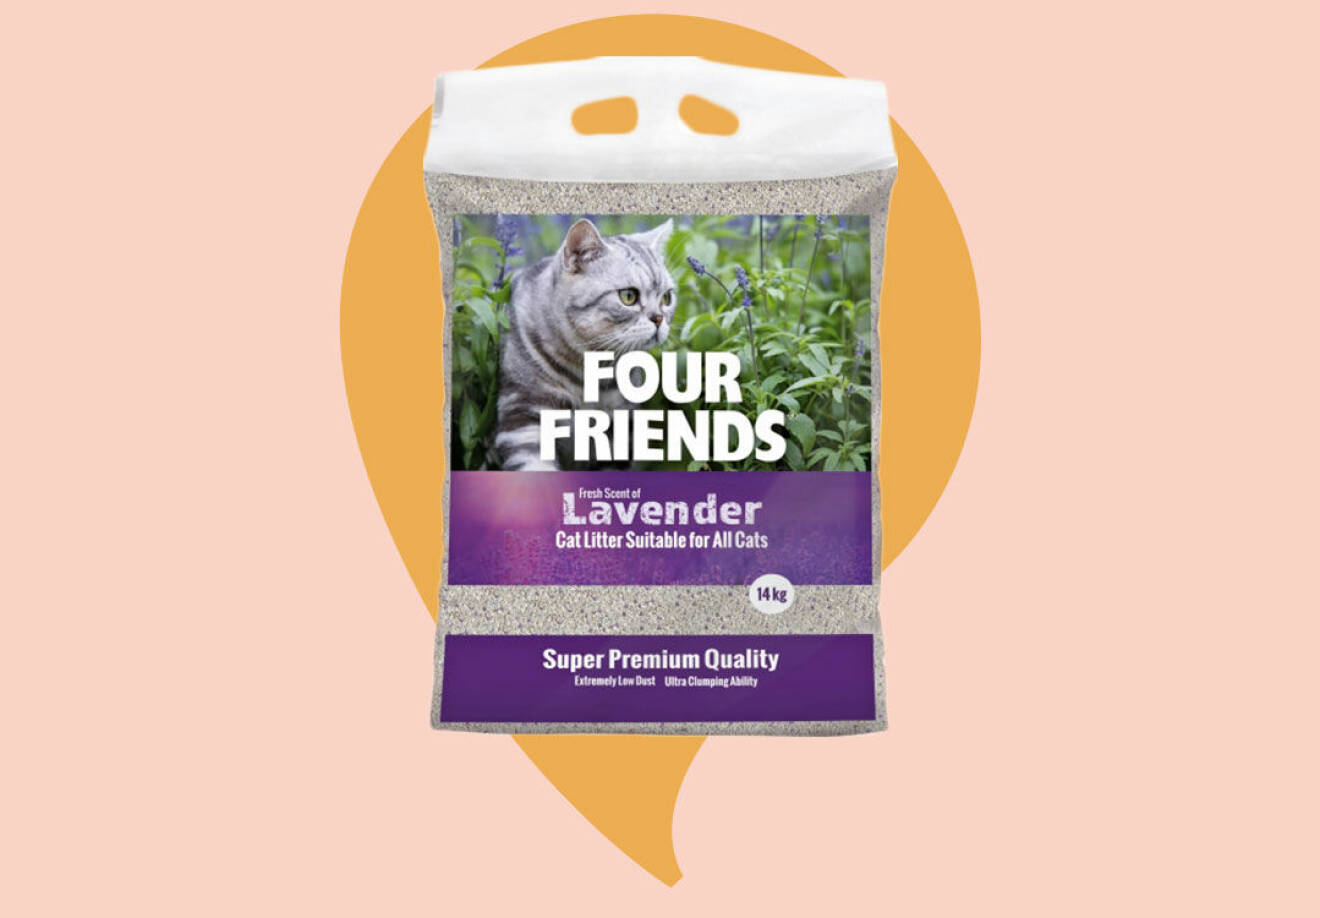 Fourfriends kattsand lavendel